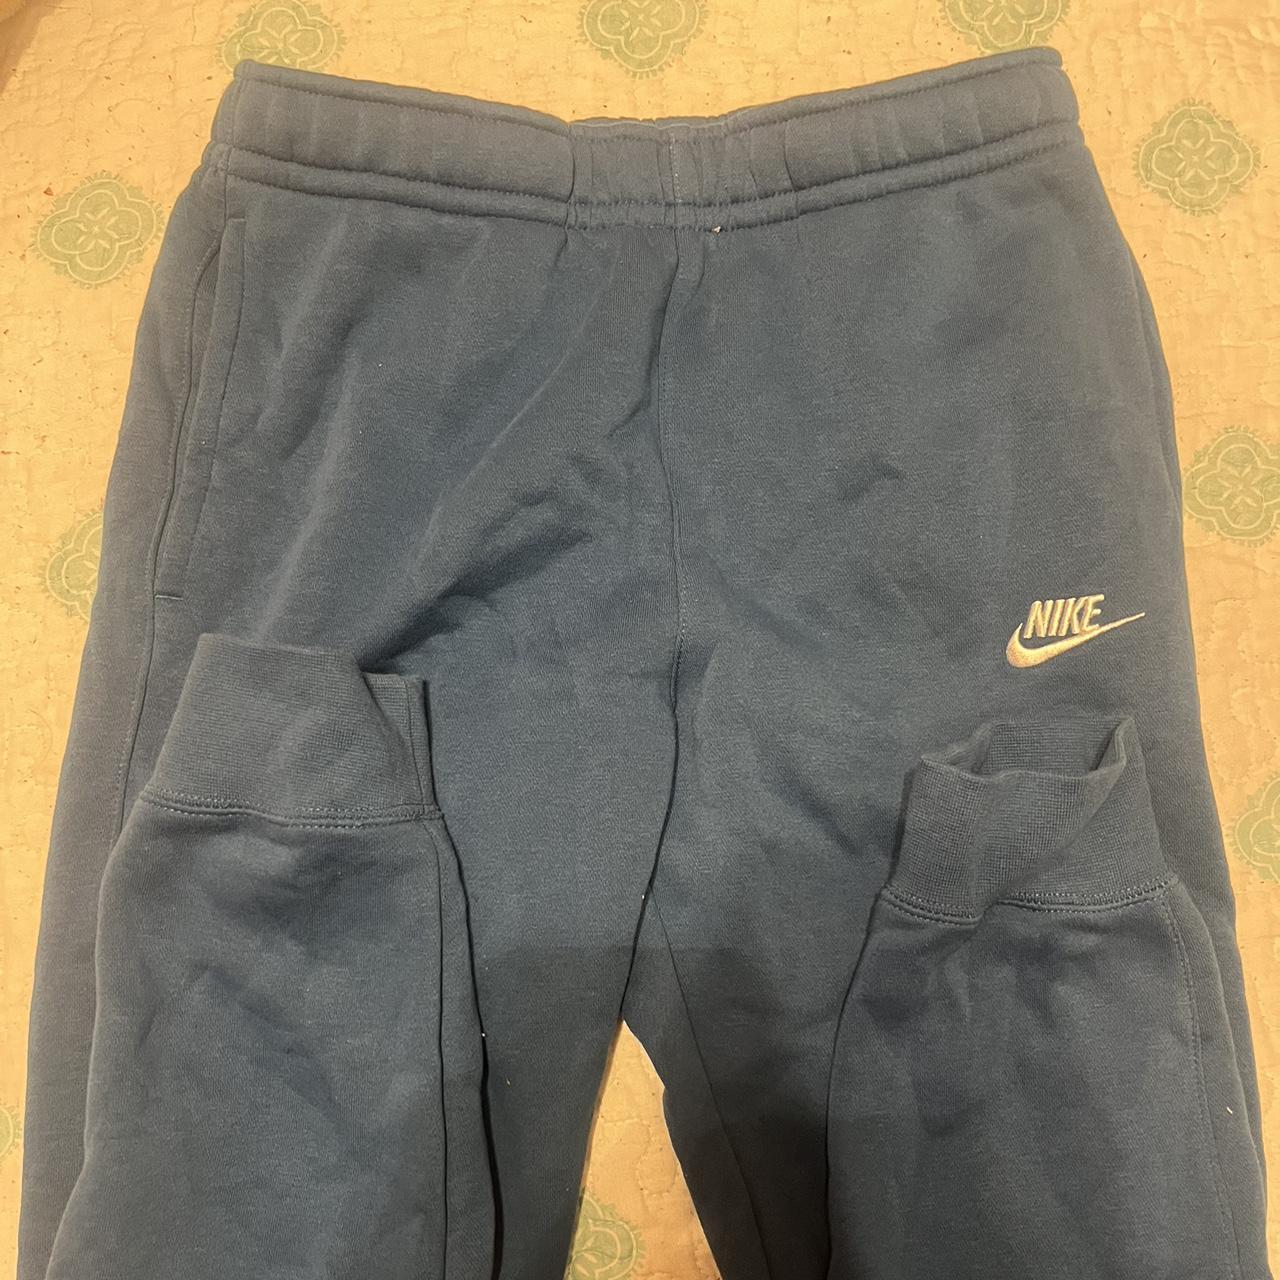 blue nike sweatpants size small, #blue #sweatpants